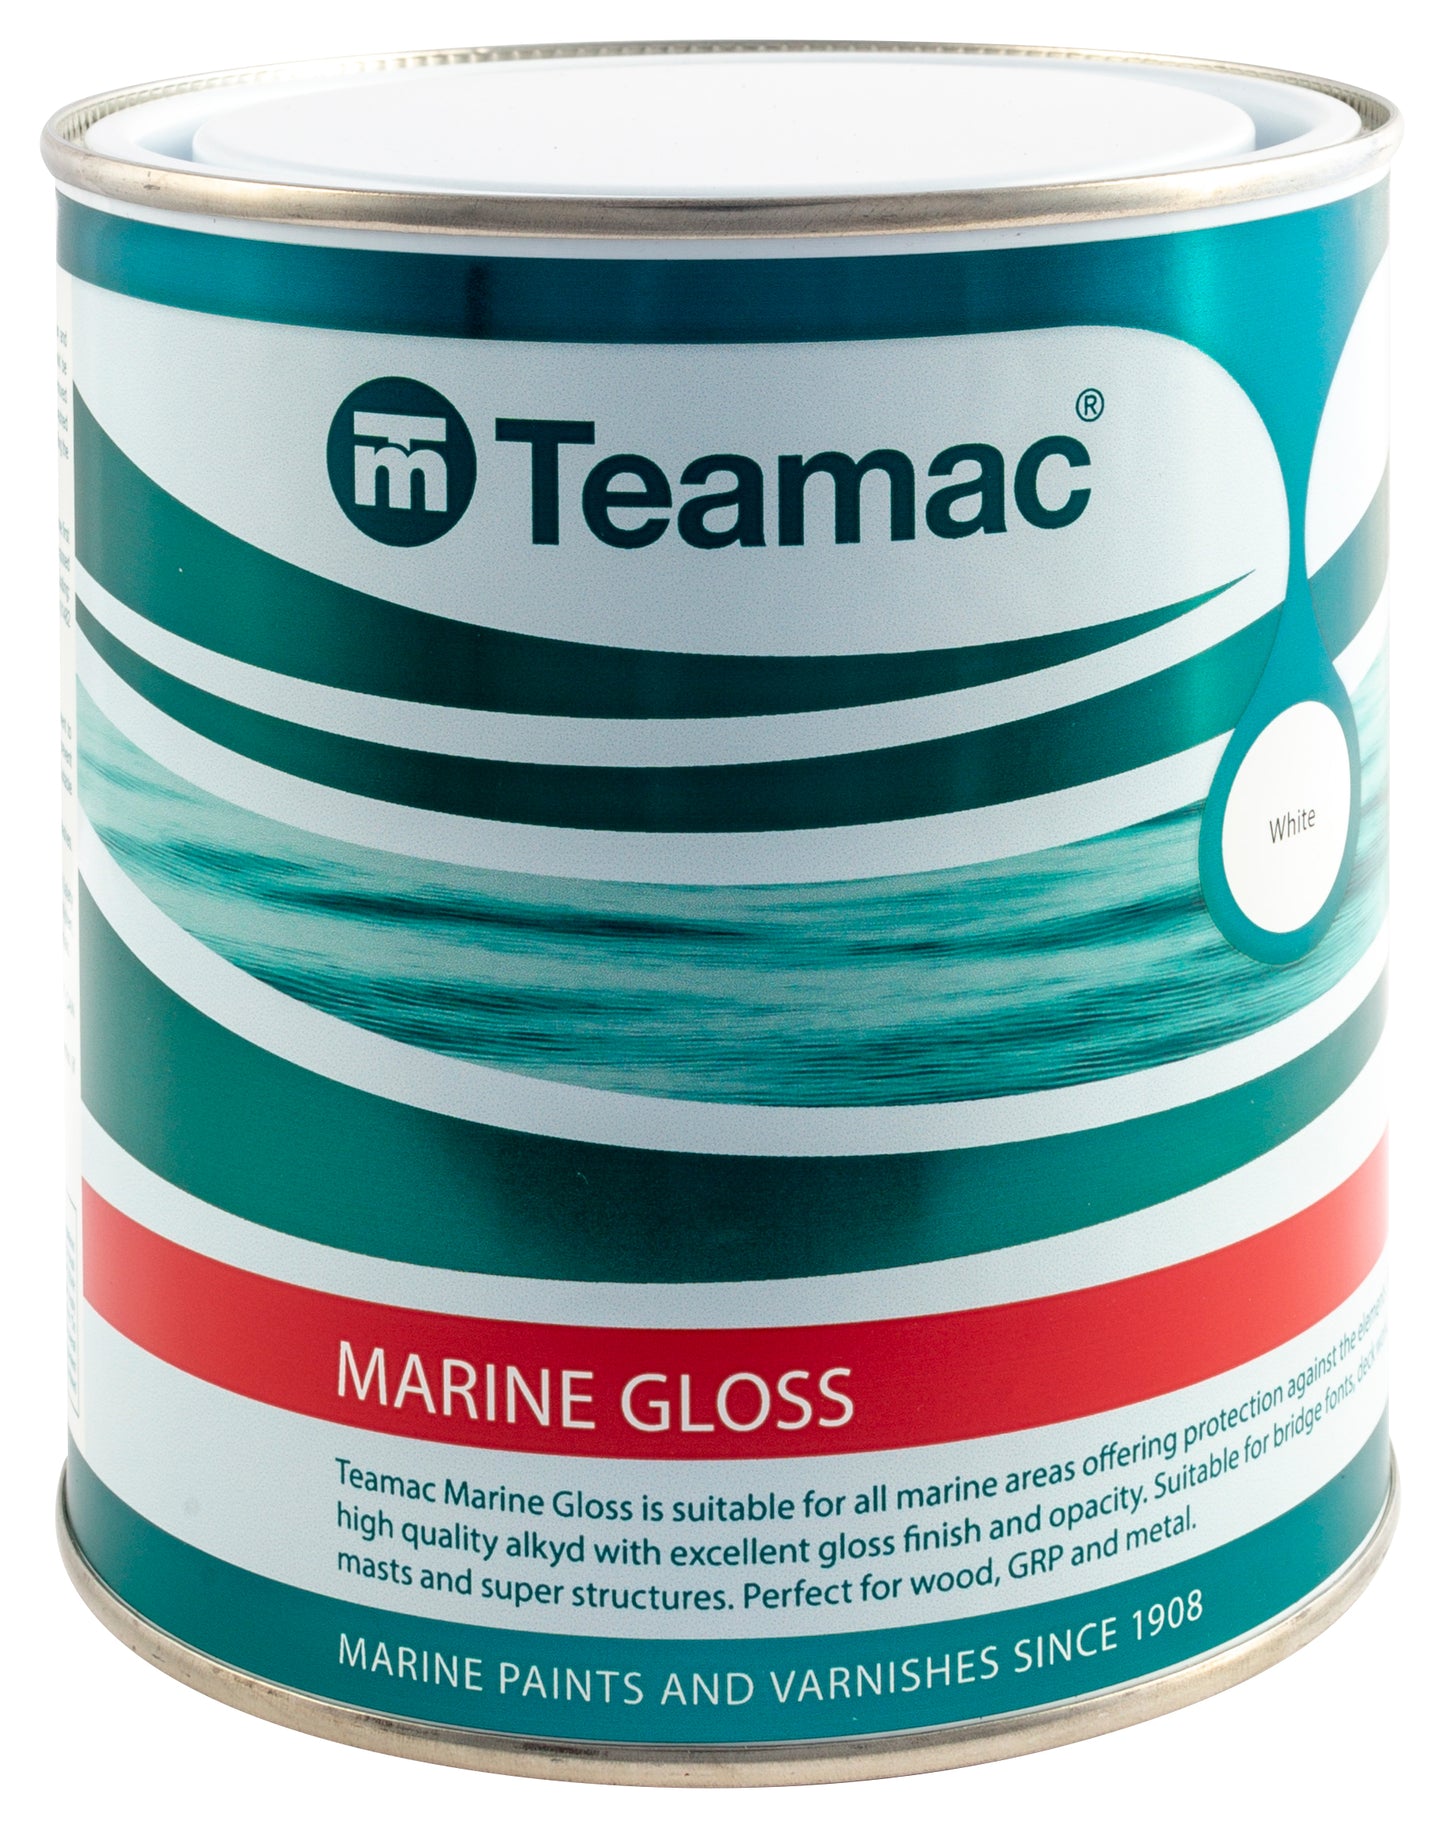 Teamac Marine Gloss 500ml